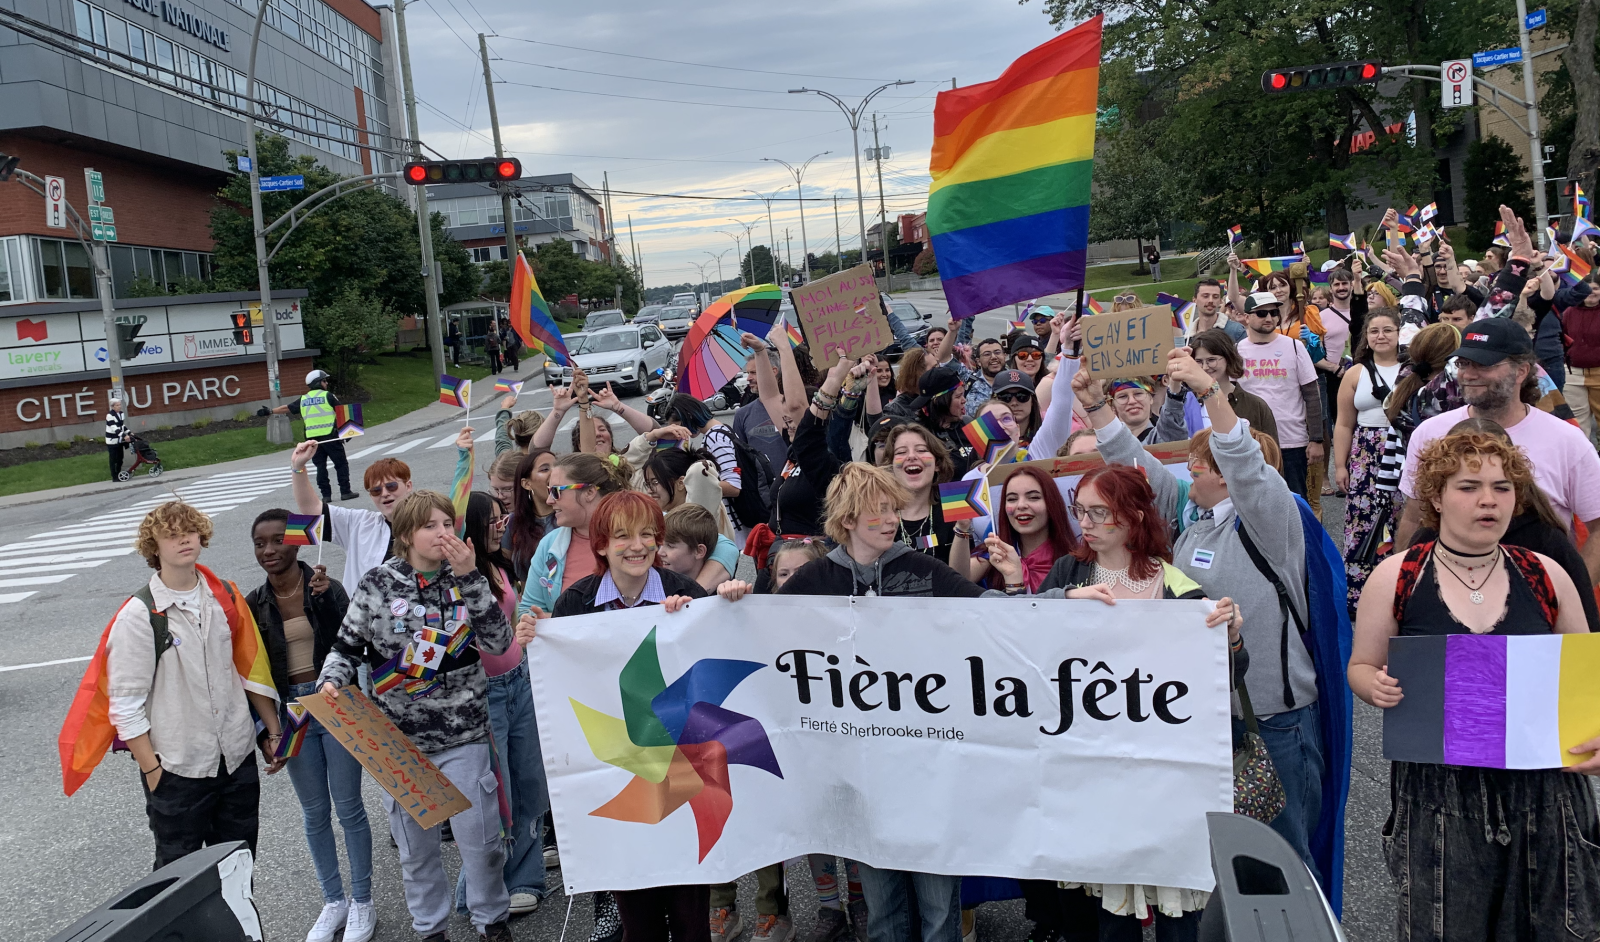 Fière la fête’s 11th diversity march hits the streets in Sherbrooke